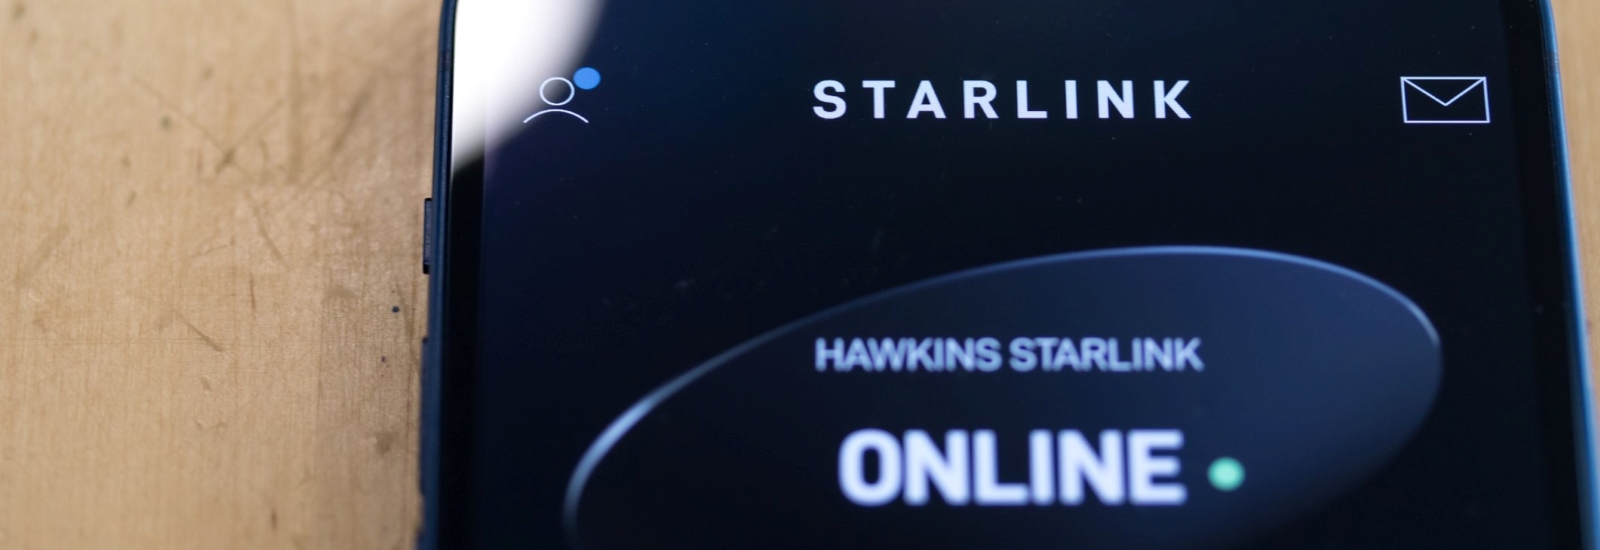 SpaceXの衛星ブロードバンドインターネット「Starlink(スターリンク)」とは？日本でのサービスについても徹底解説